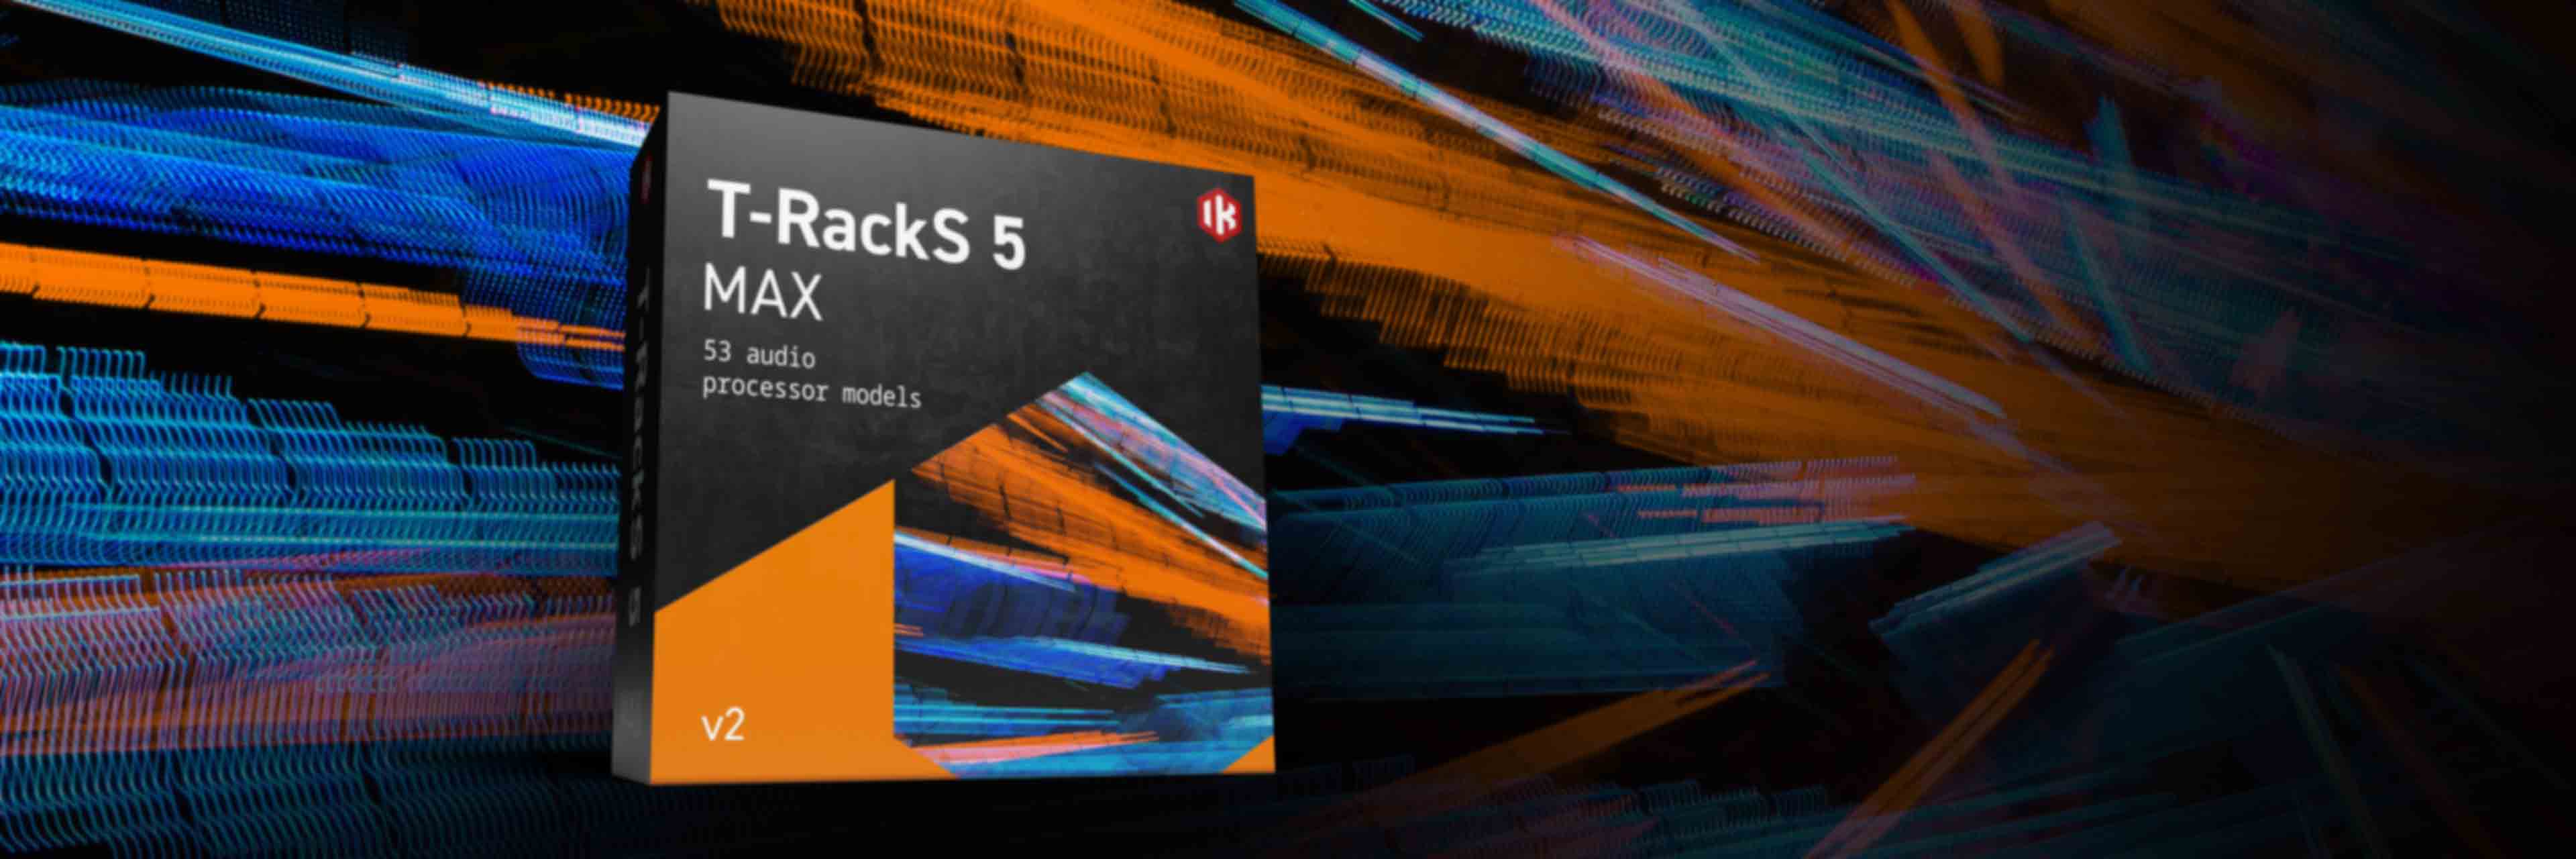 IK Multimedia T-RackS 5 MAX Bundle Download - Extra Plugins